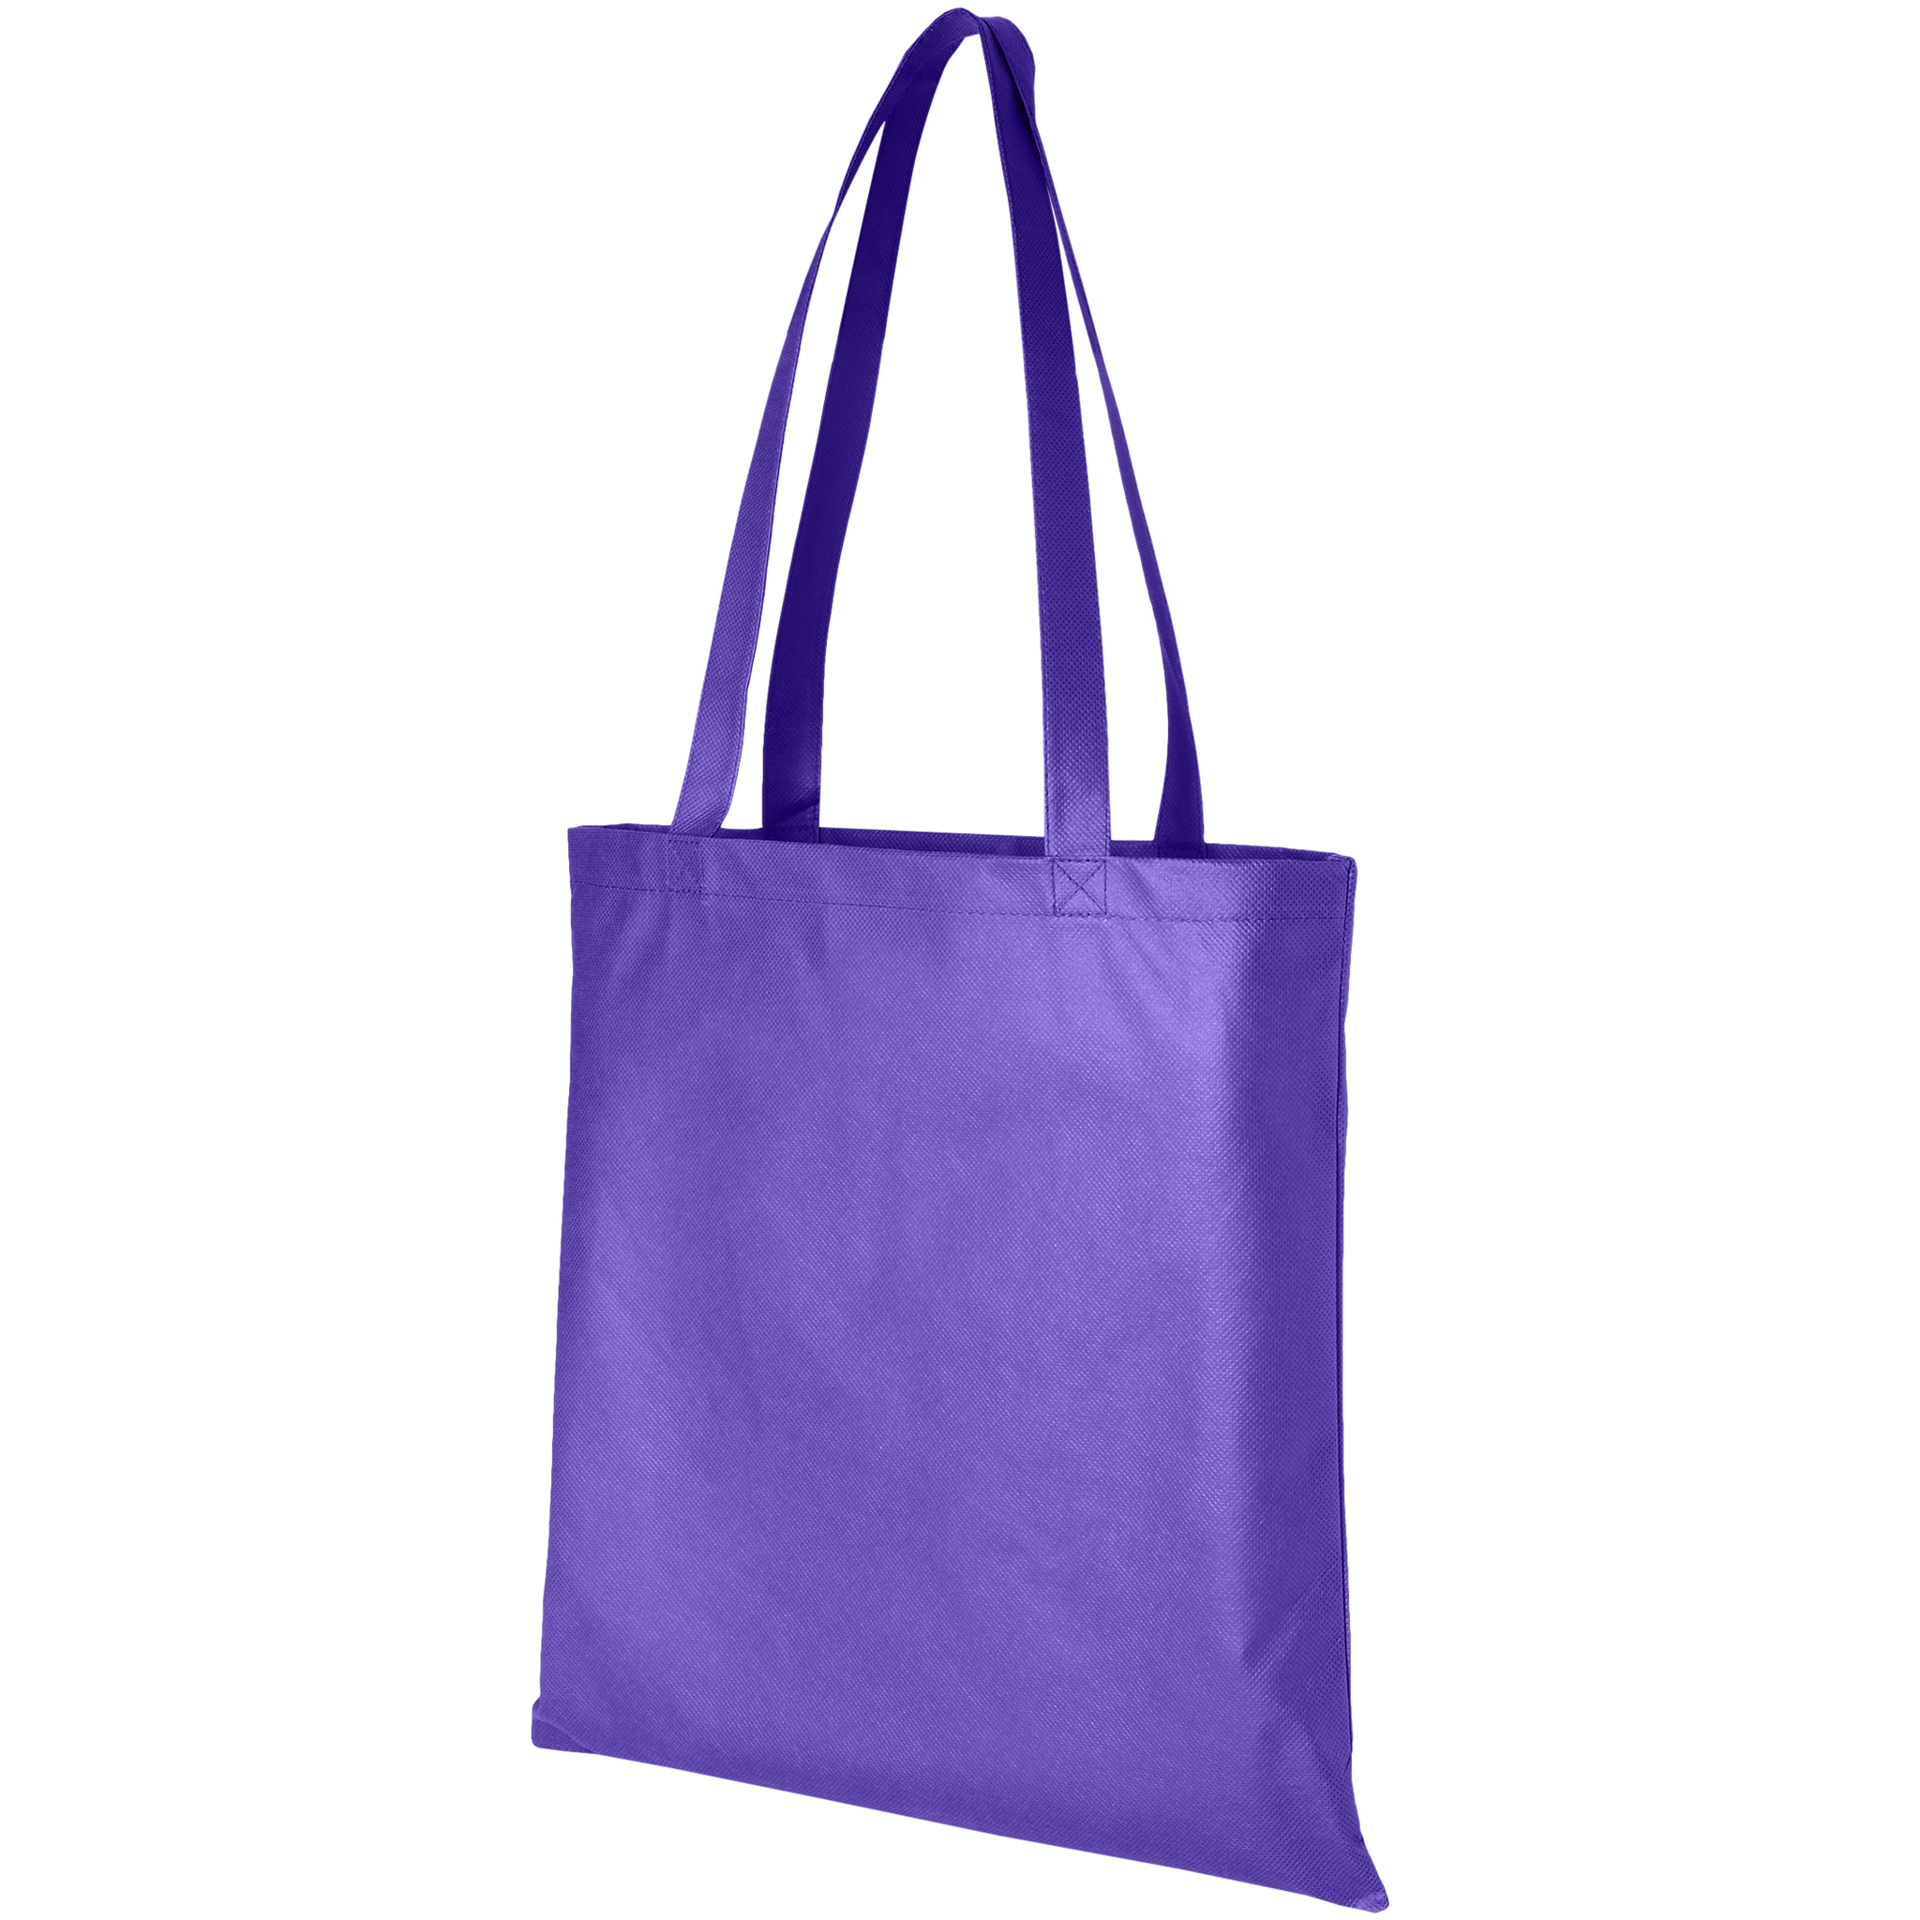 Promotional shopper bag in purple